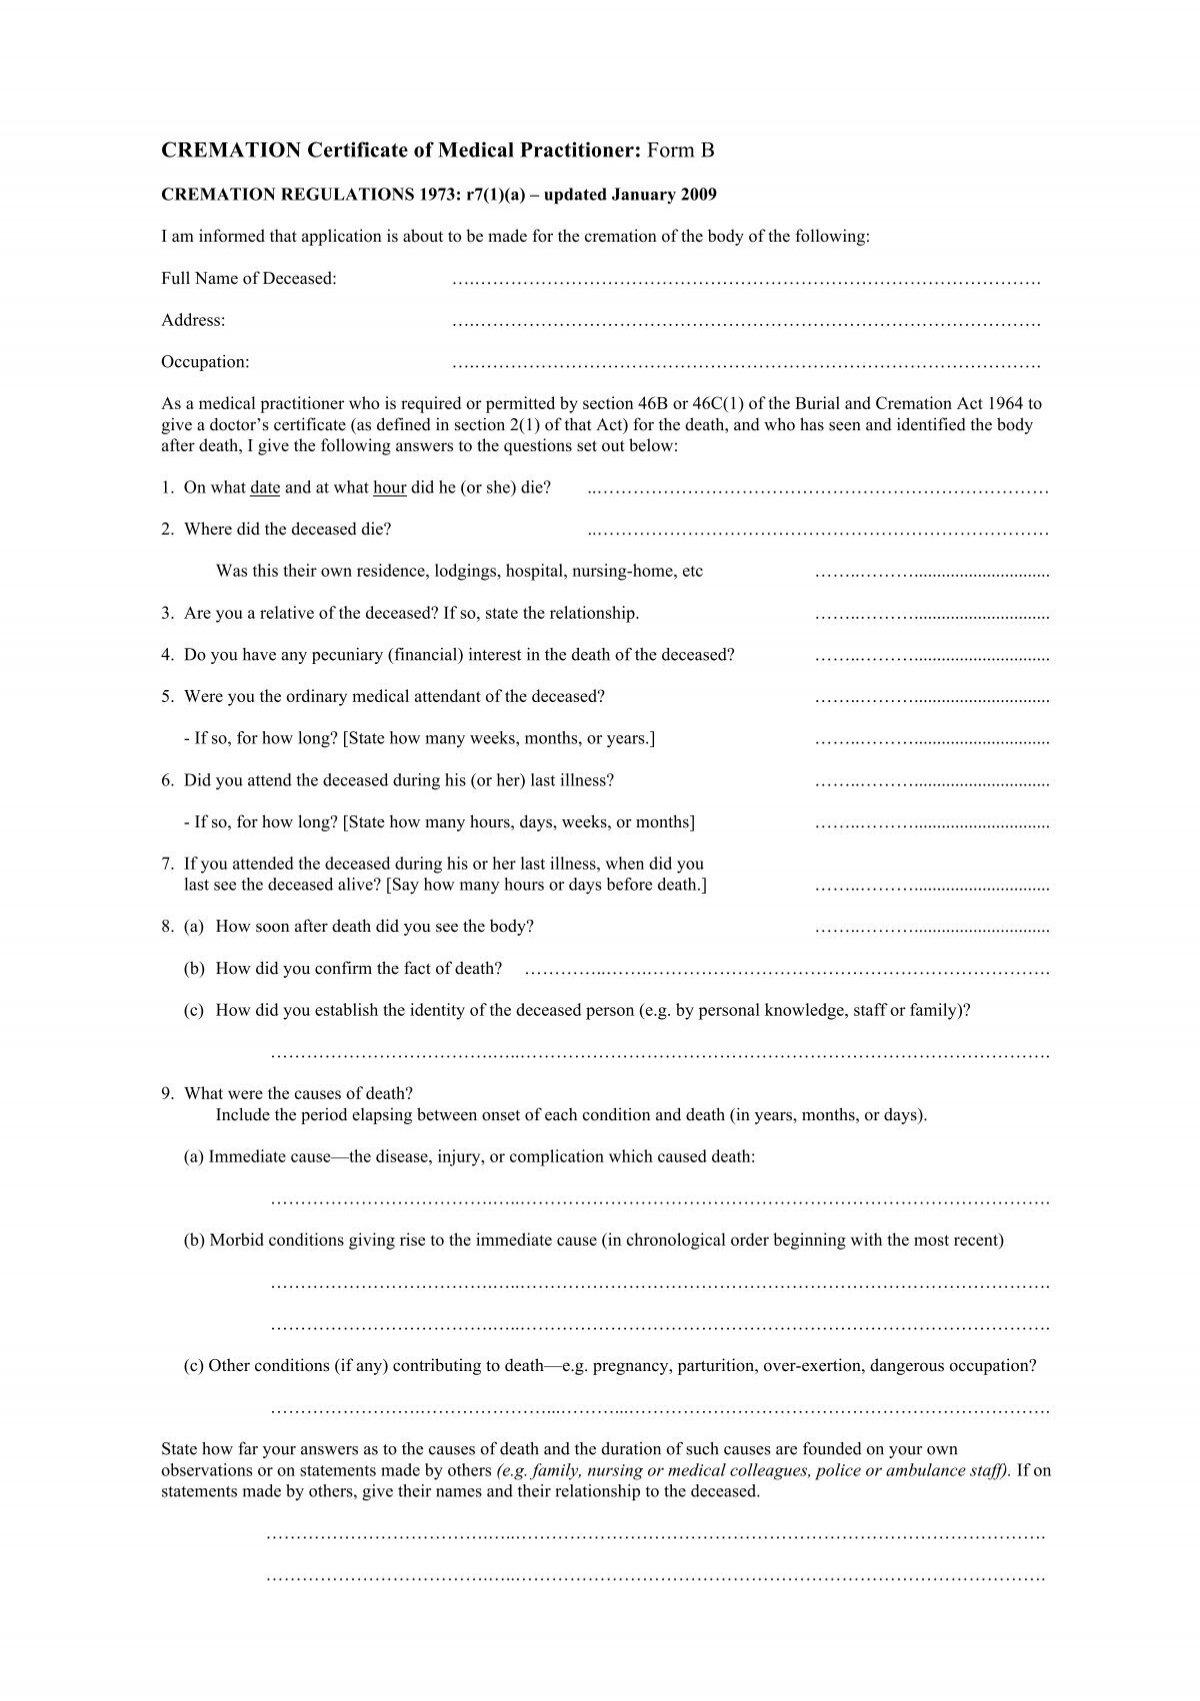 CREMATION Certificate of Medical Practitioner: Form B Vodafone NZ